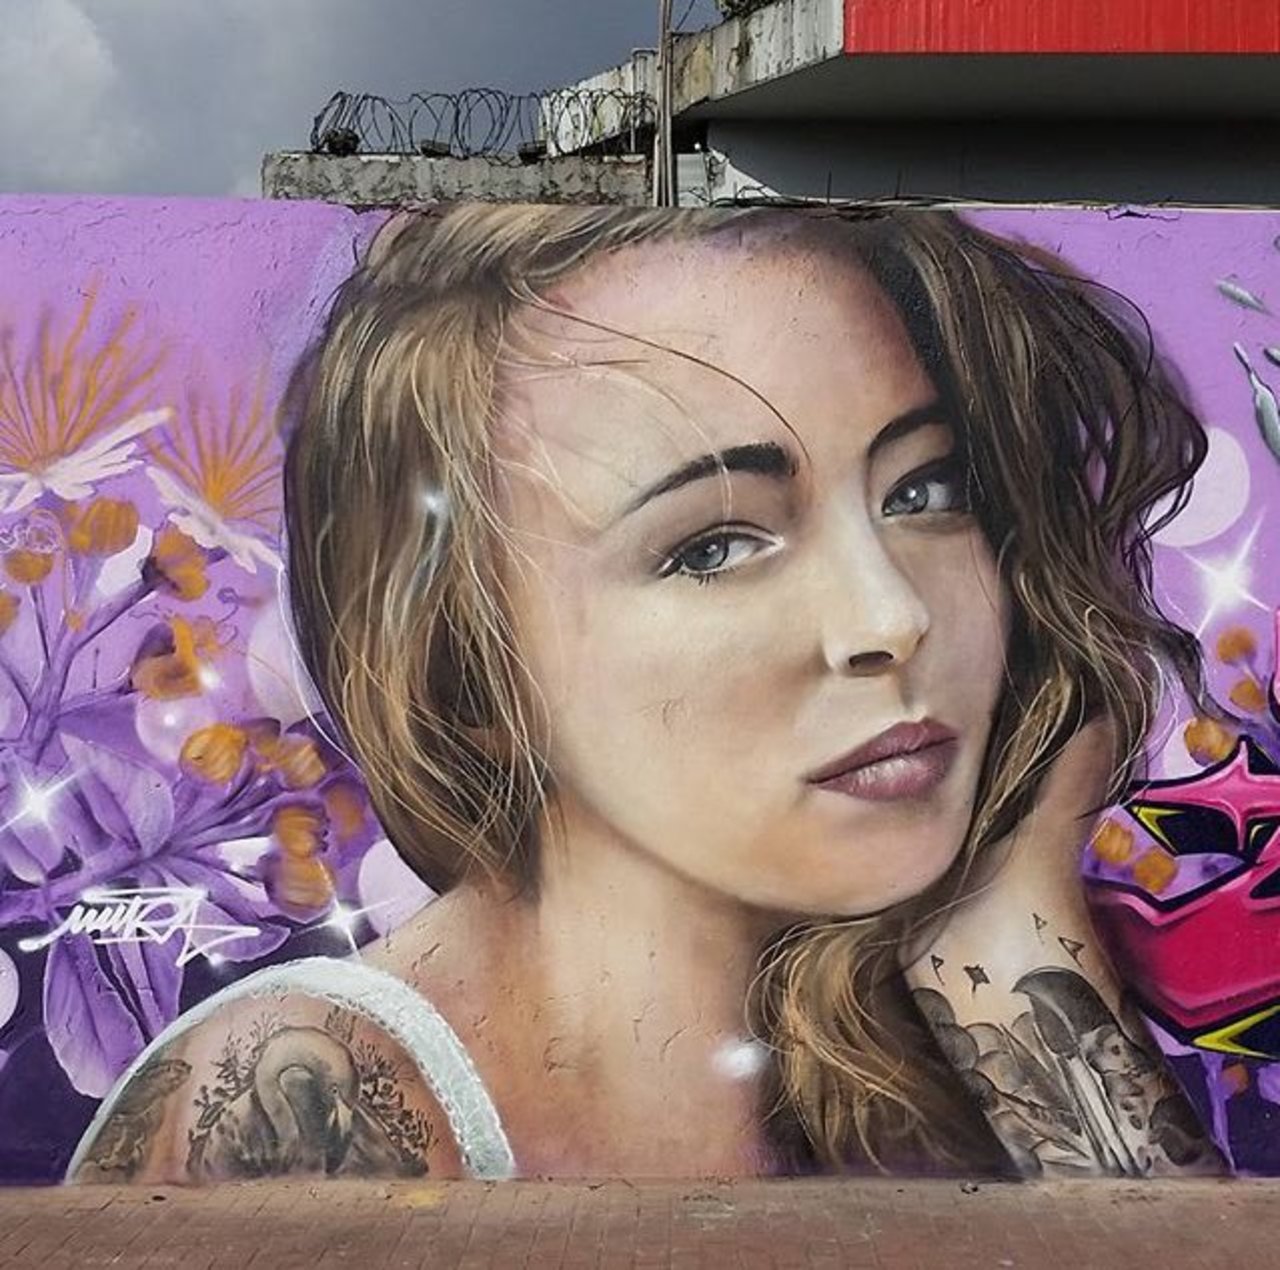 New Street Art by Mantarea 

#art #graffiti #mural #streetart https://t.co/xCIyhLjNLk